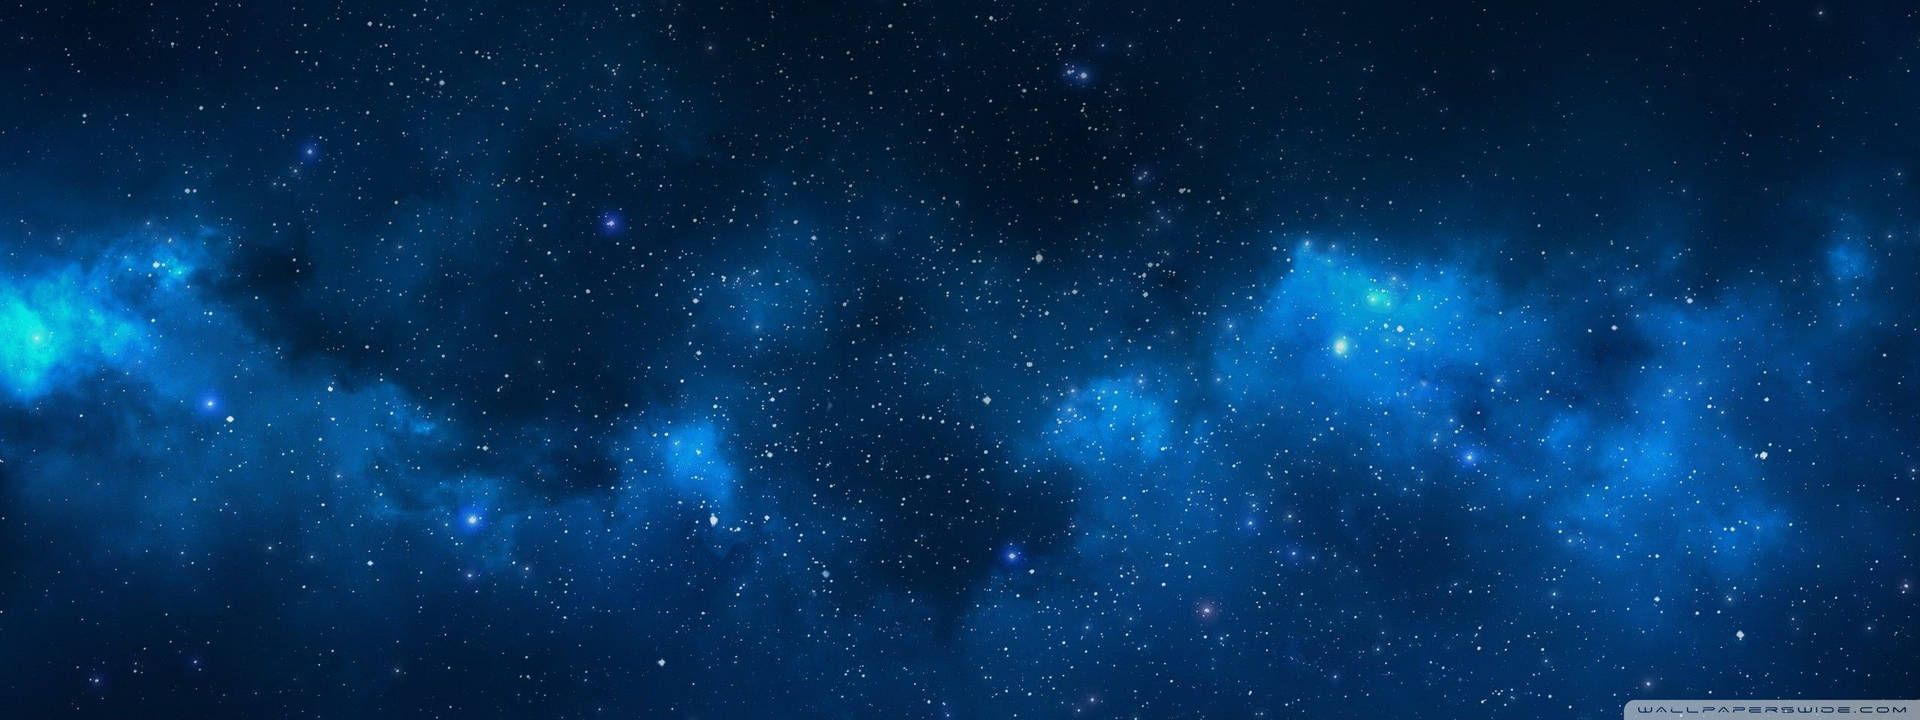 Marvel At The Starry Night Sky Wallpaper